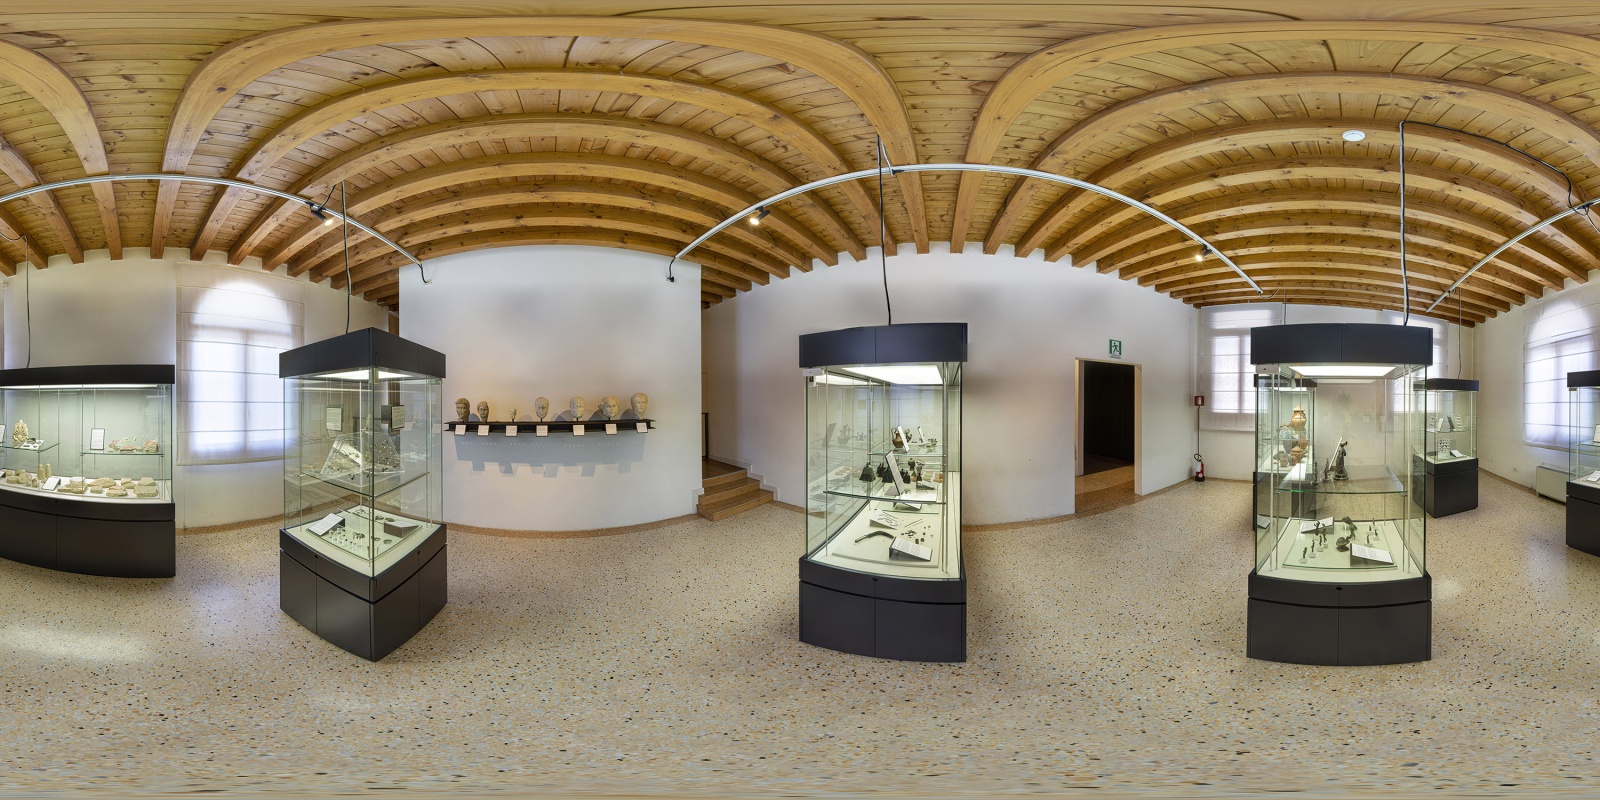 Museo Archeologico "Eno Bellis" Oderzo (Tv)